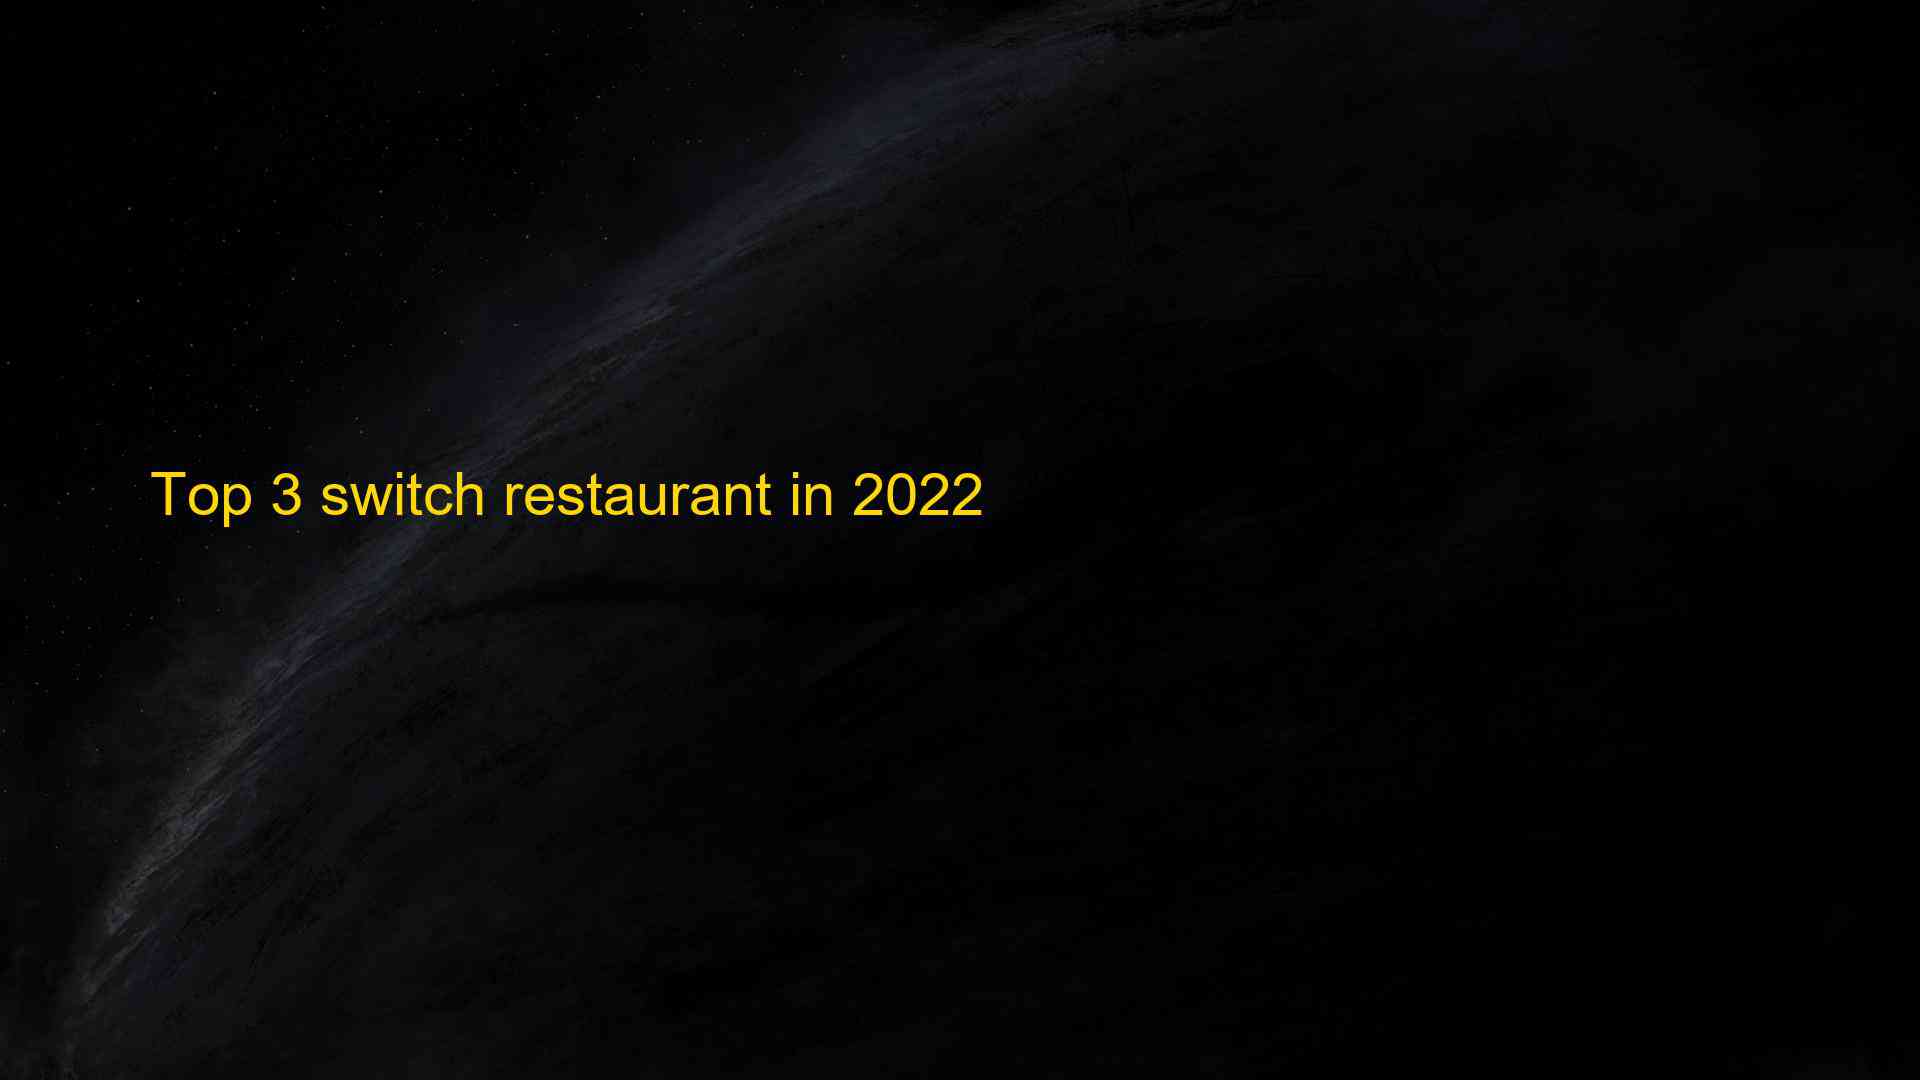 Top 3 switch restaurant in 2022 1663537024